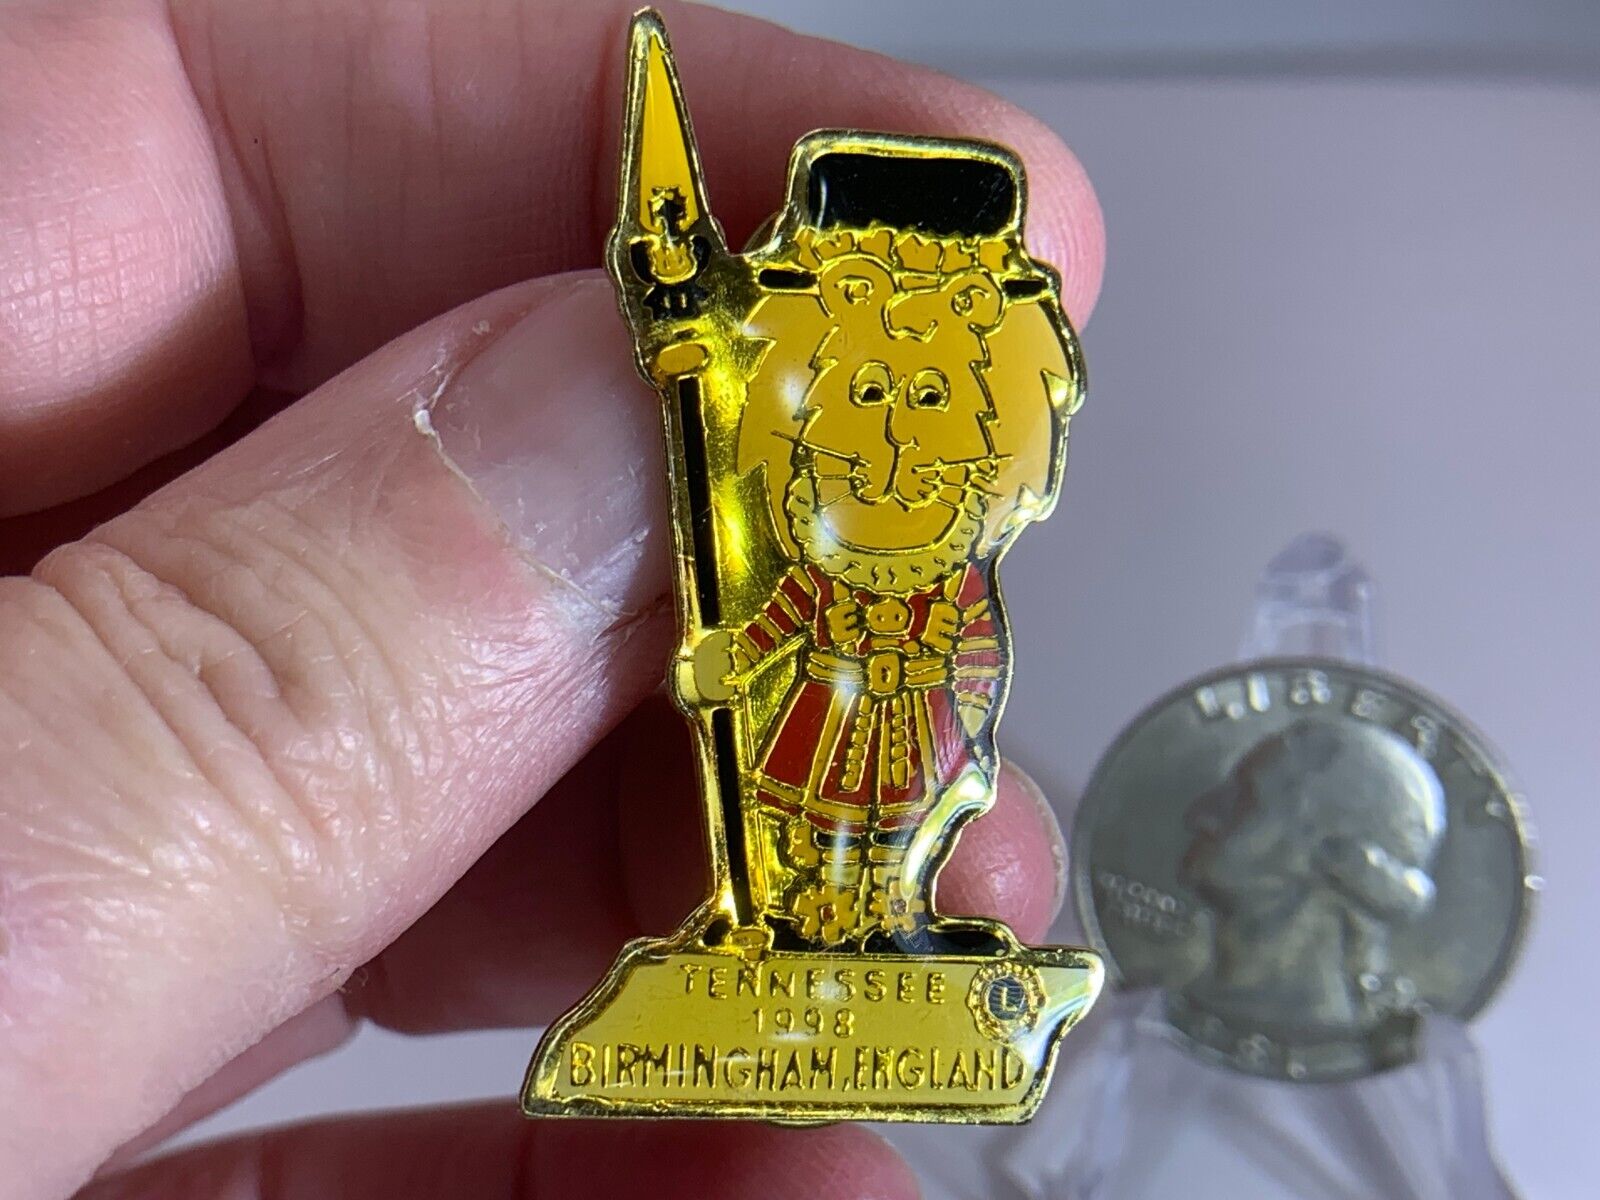 Lions Club Tennessee 1998 Birmingham England Vintage Tack Pin T-1271